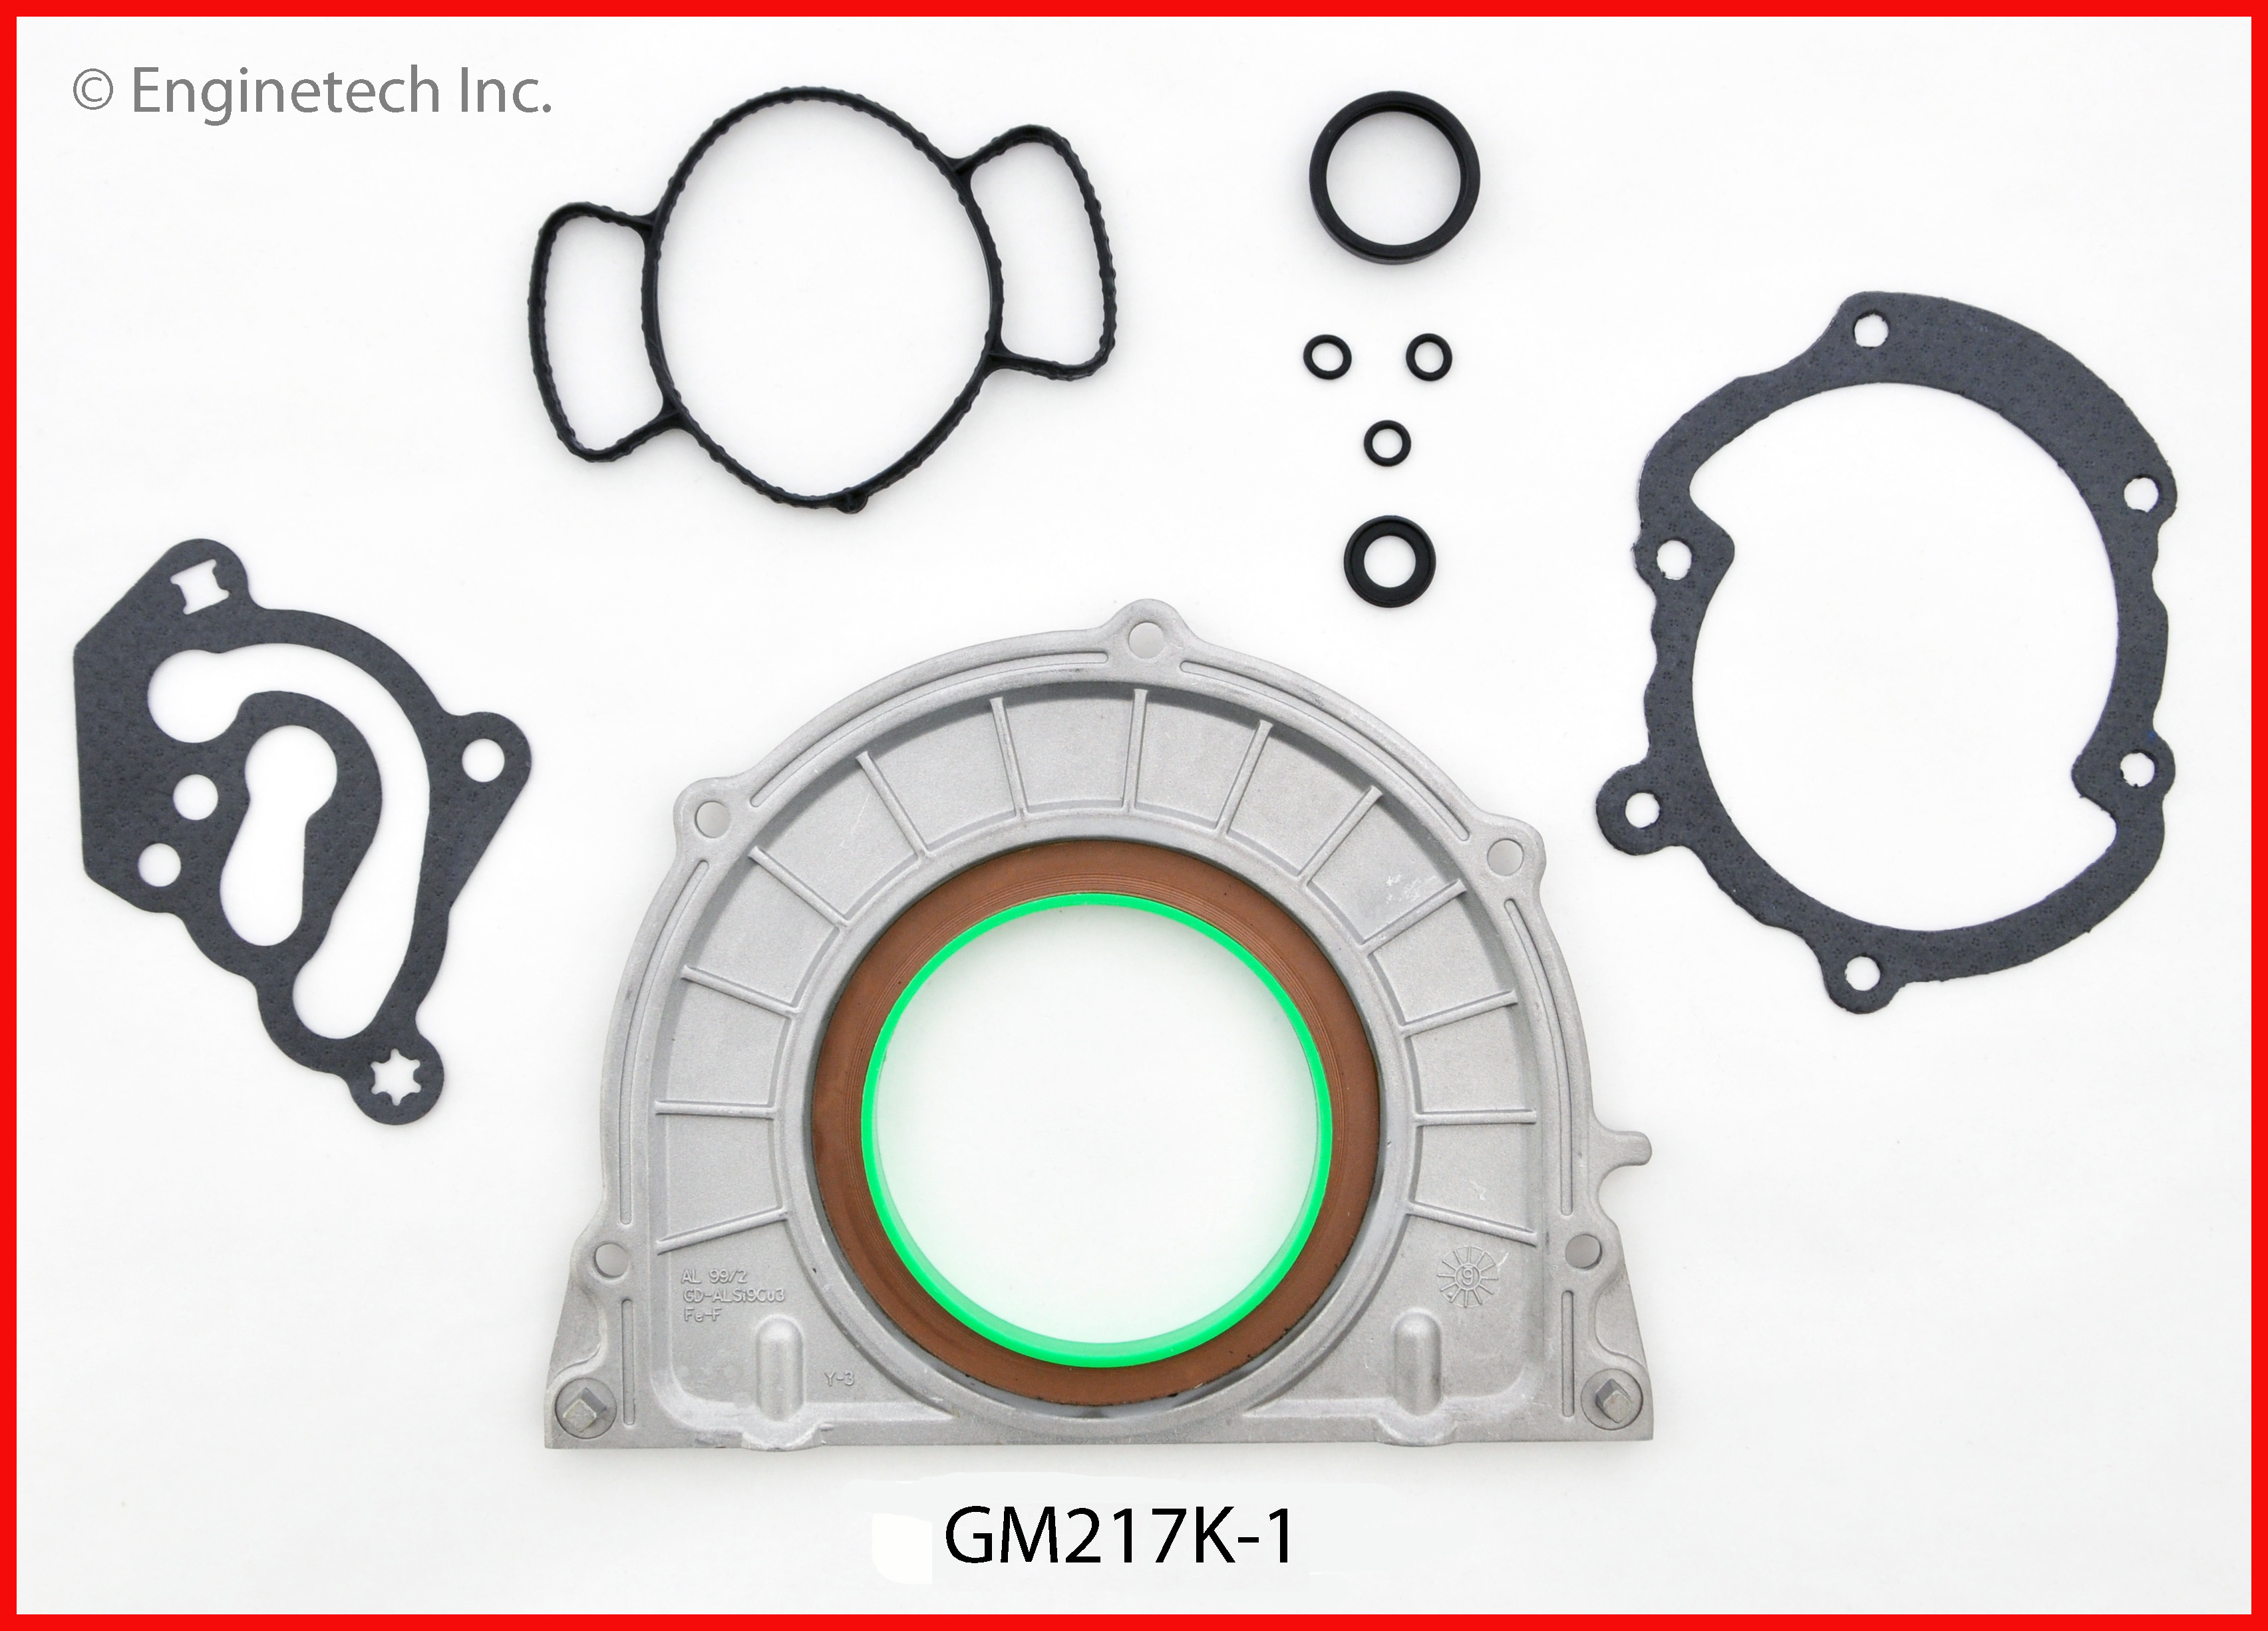 GM217K-1 Gasket Set - Full Enginetech